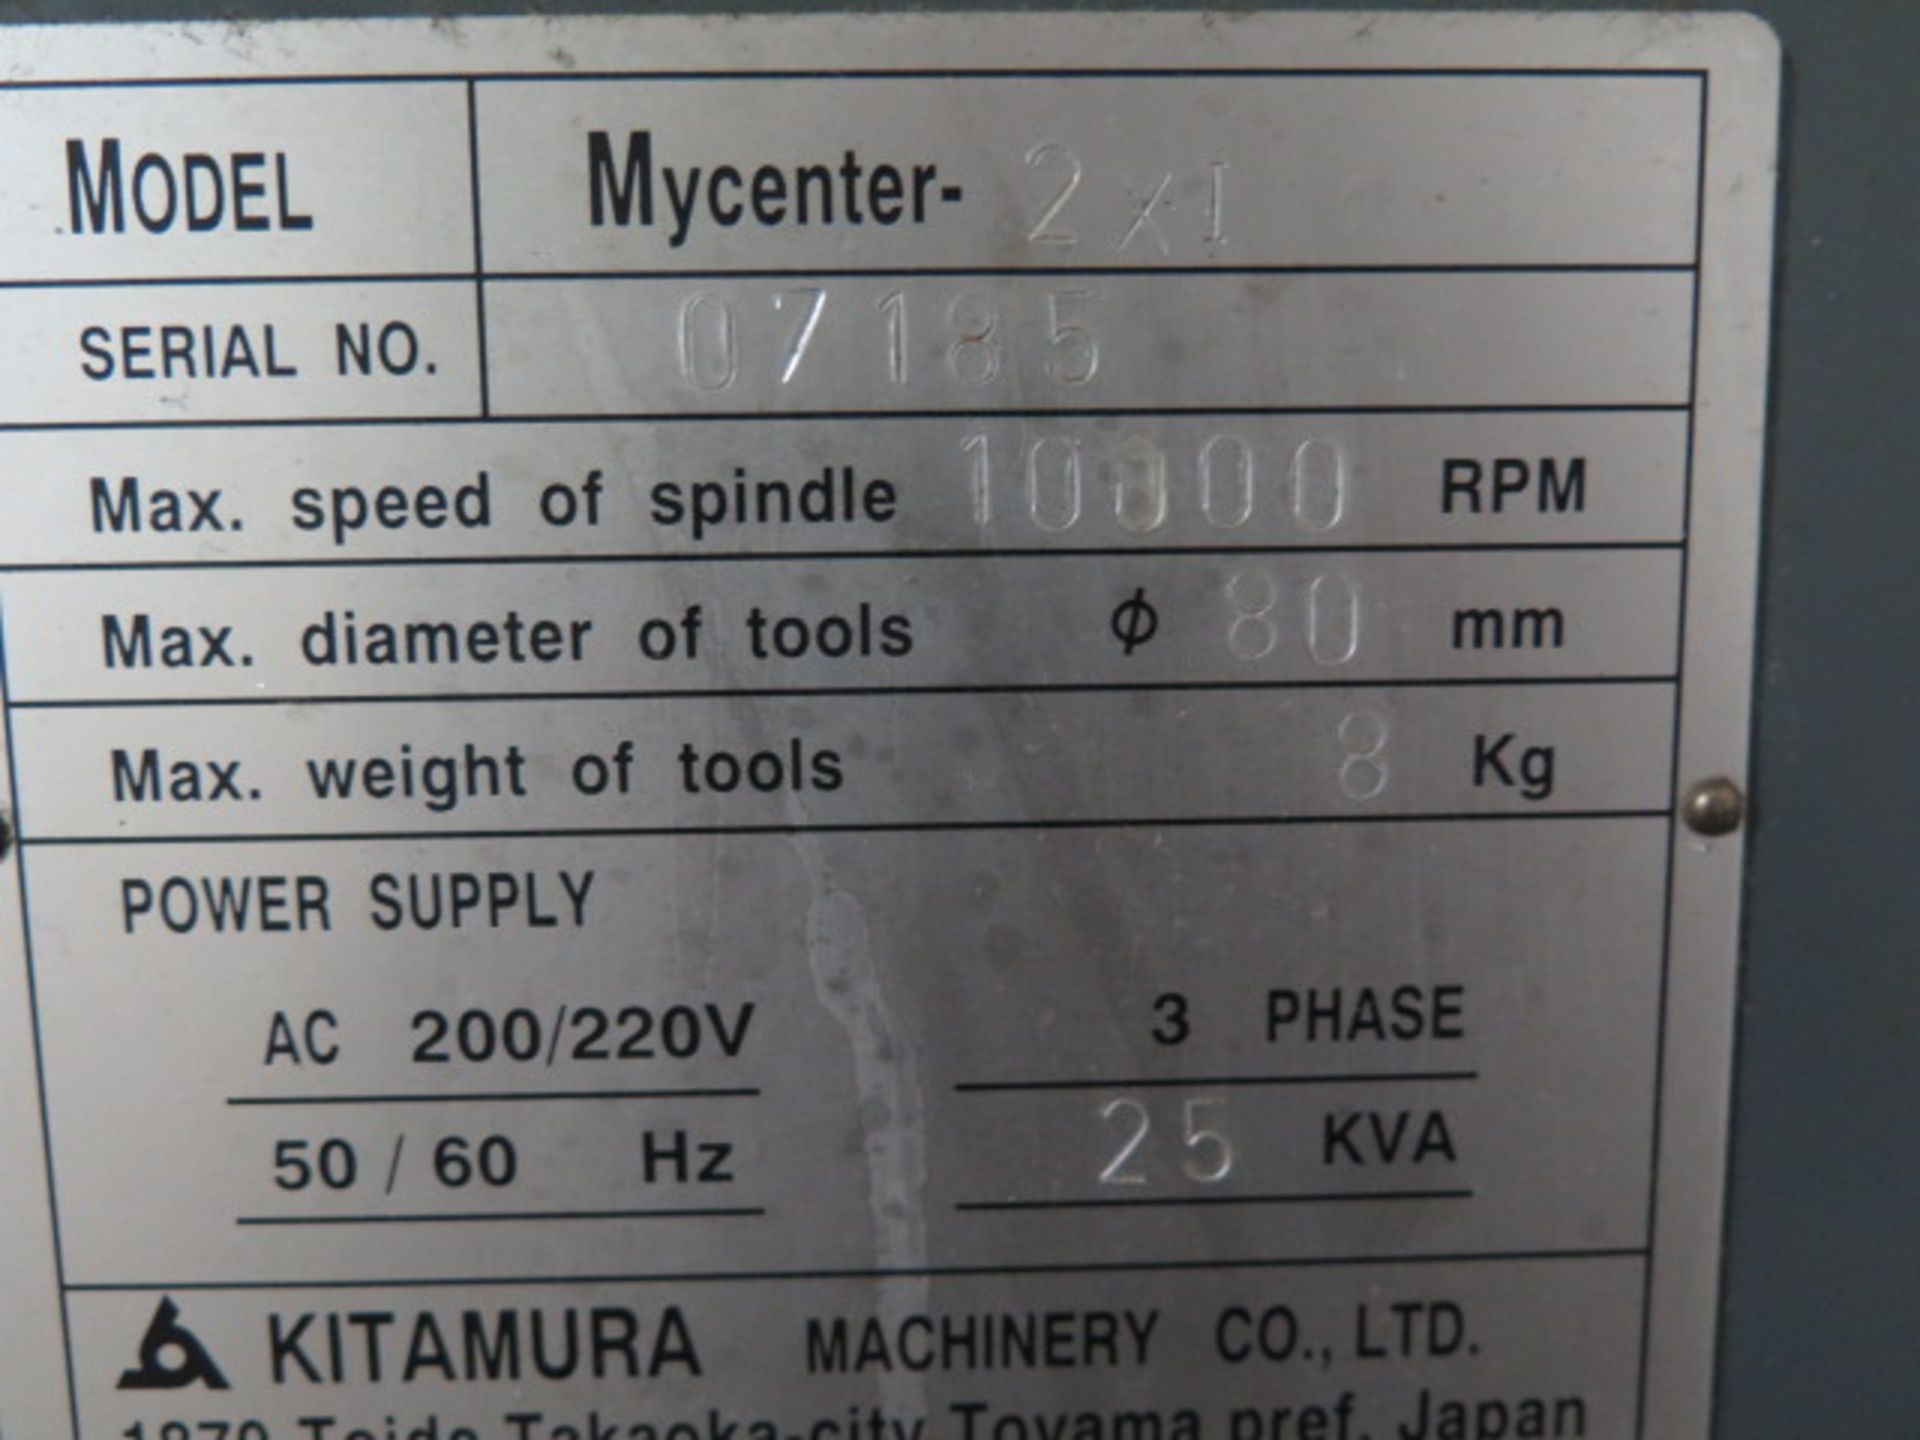 1999 Kitamura Mycenter-2Xi CNC VMC s/n 07185 w/ Fanuc Series 16i-M Controls, SOLD AS IS - Image 22 of 22